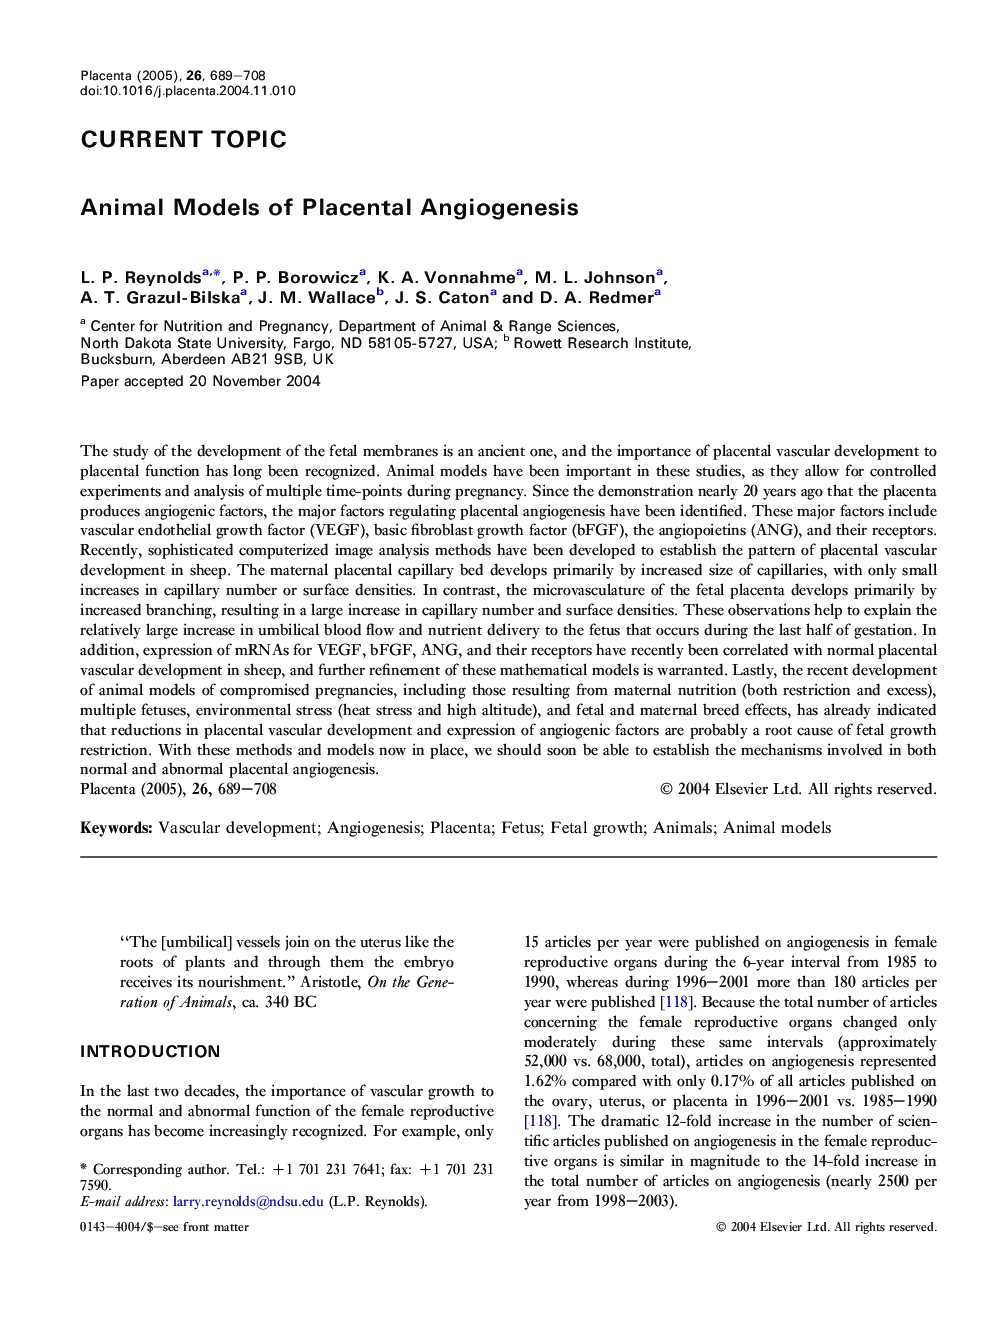 Animal models of placental angiogenesis